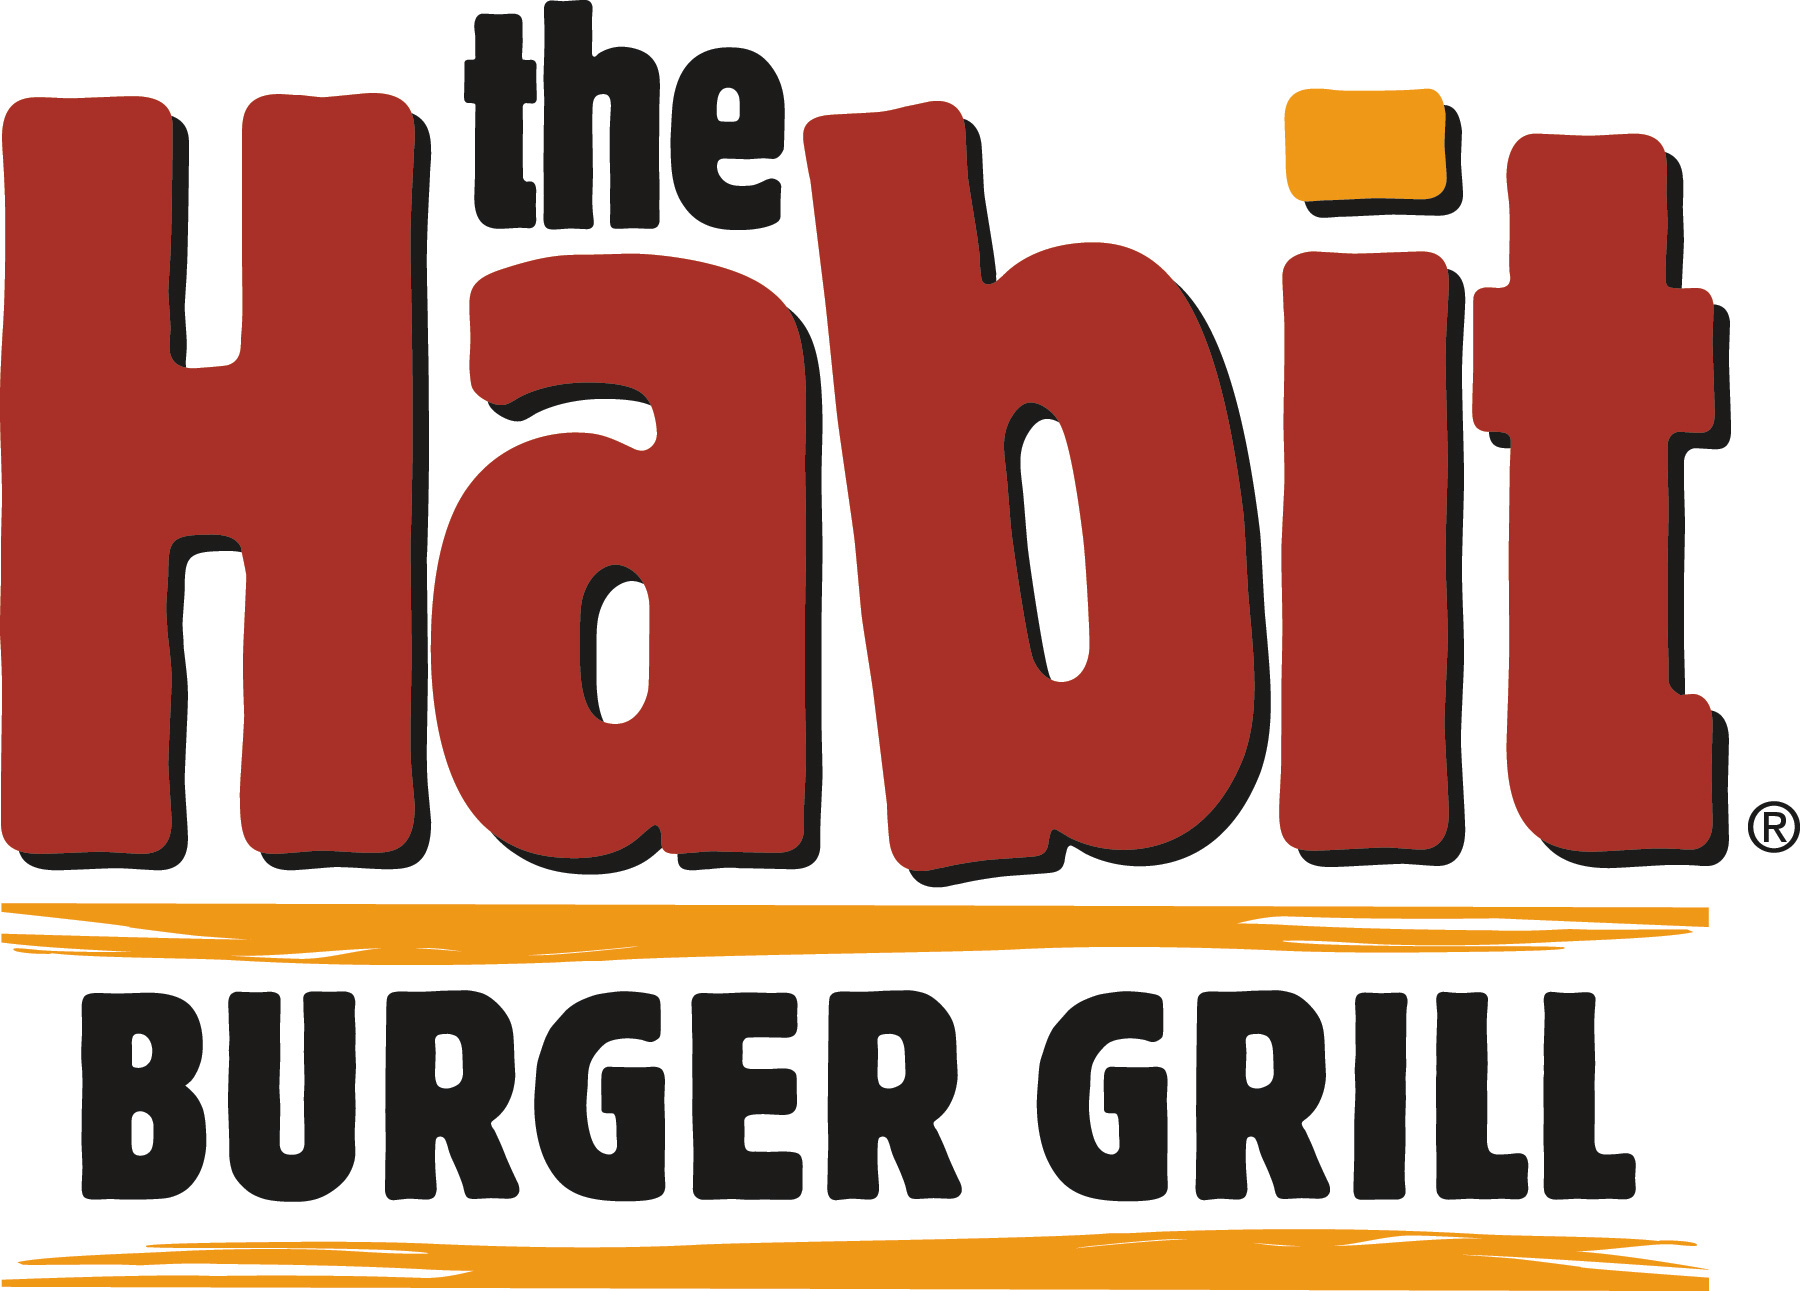 habitburger-logo.jpg